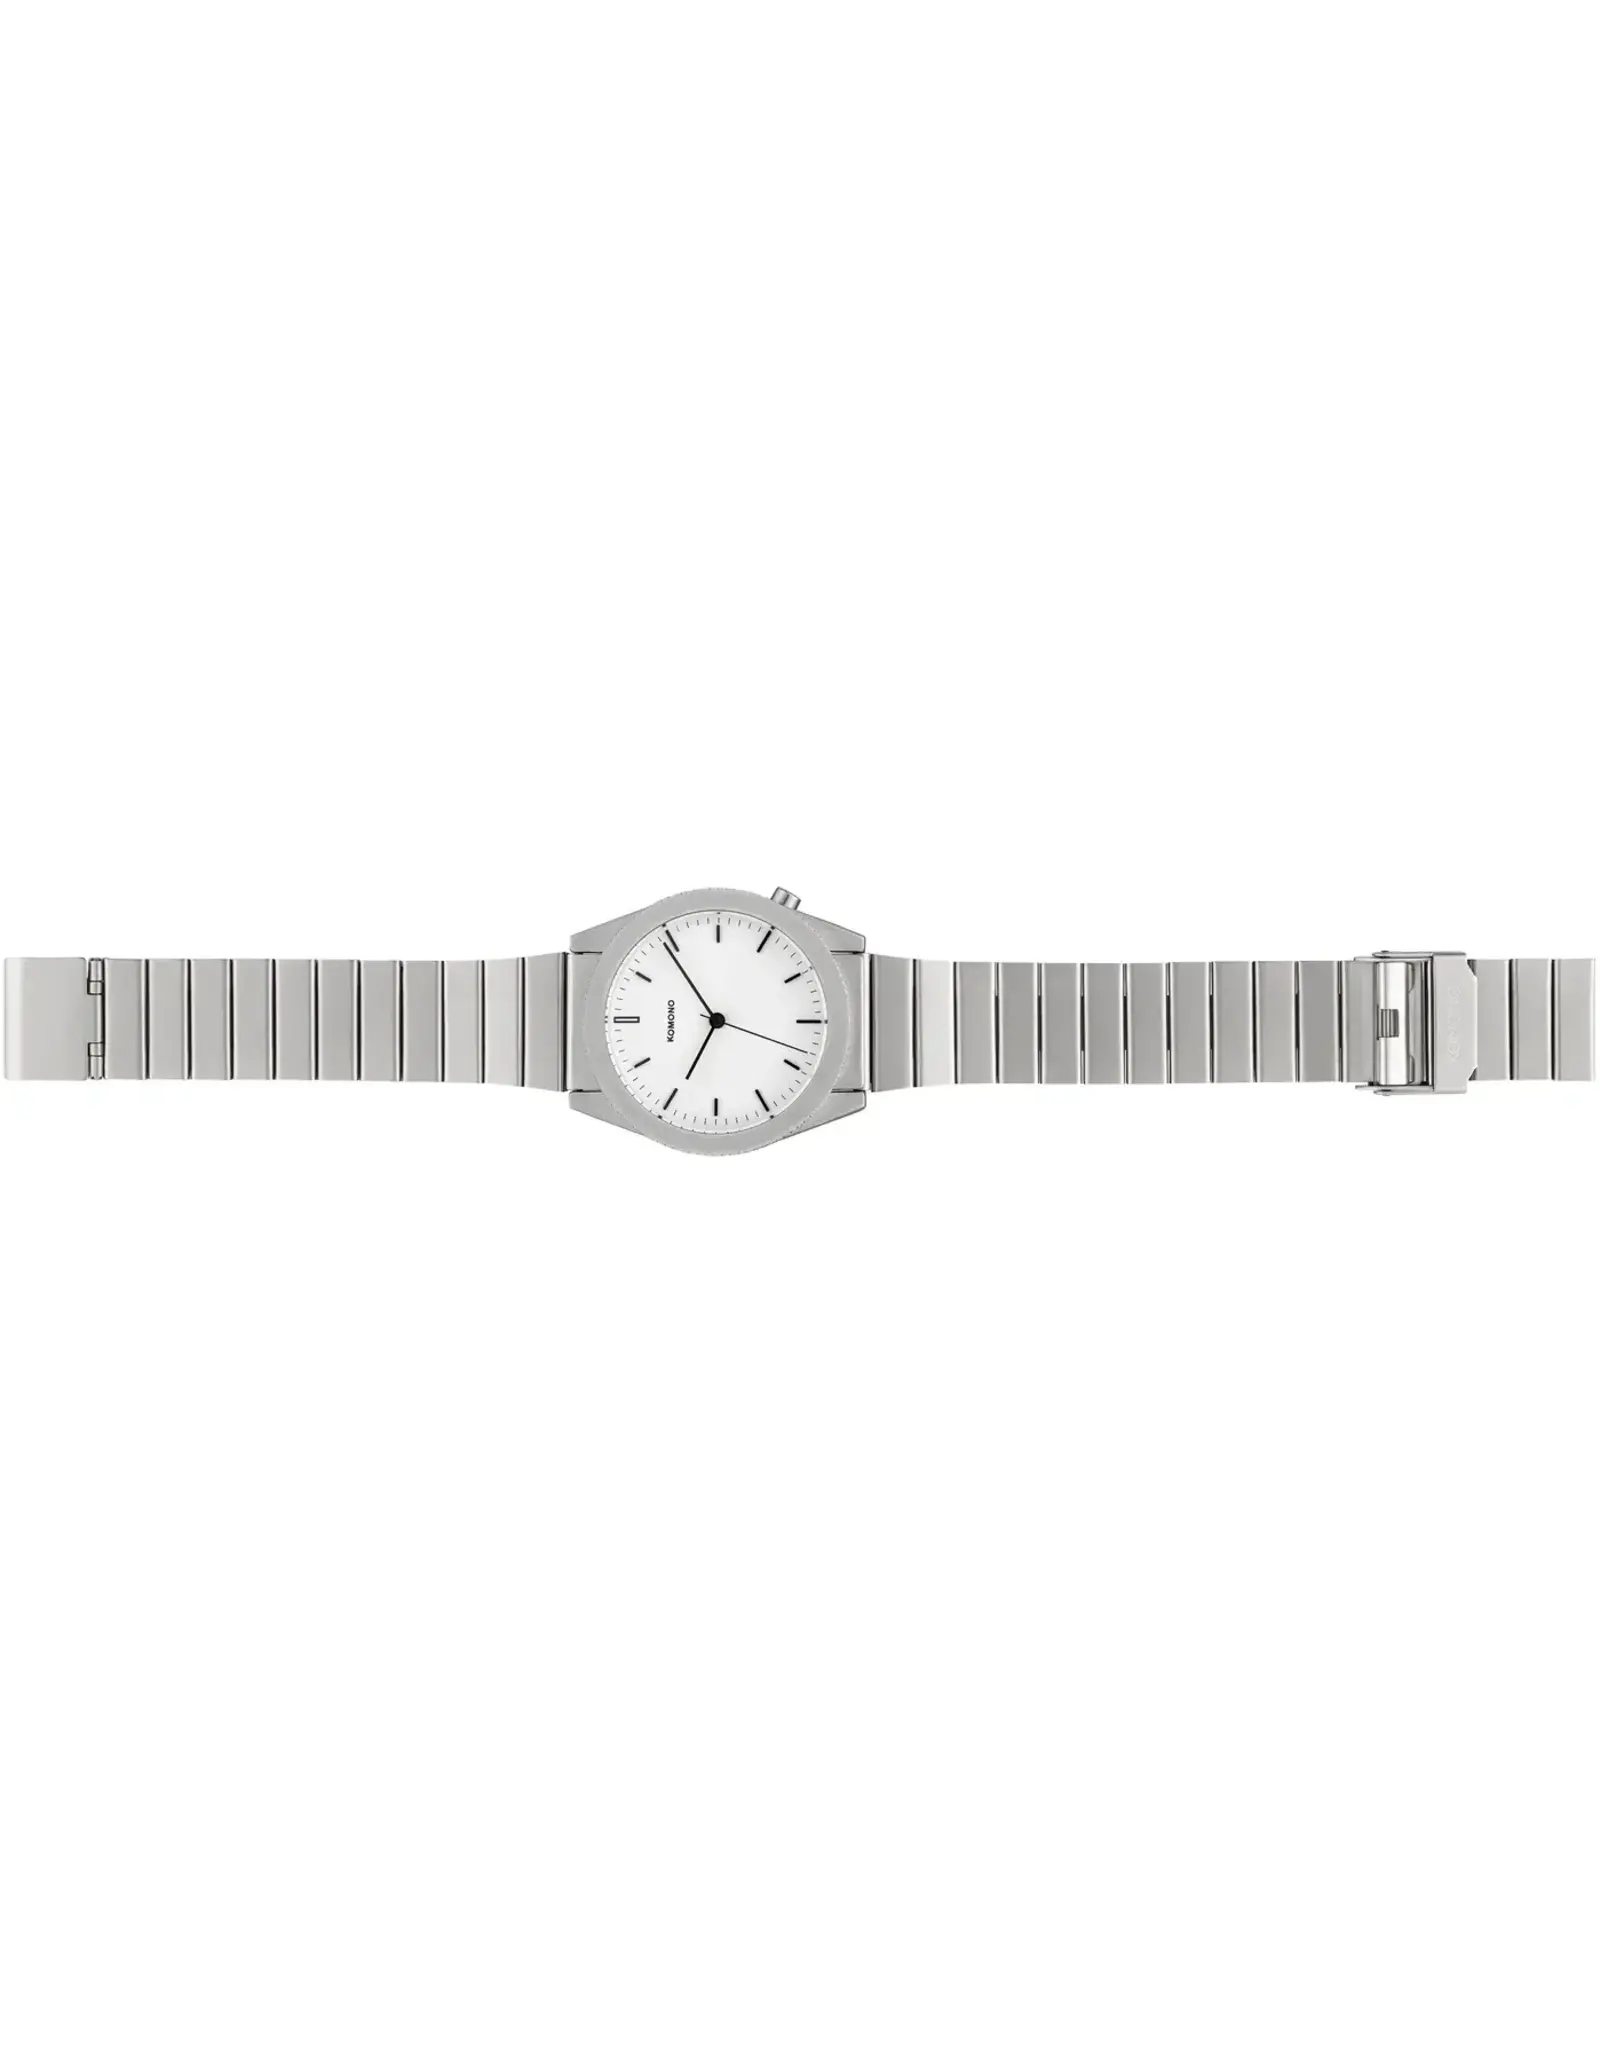 Komono Solid Silver Ray Watch